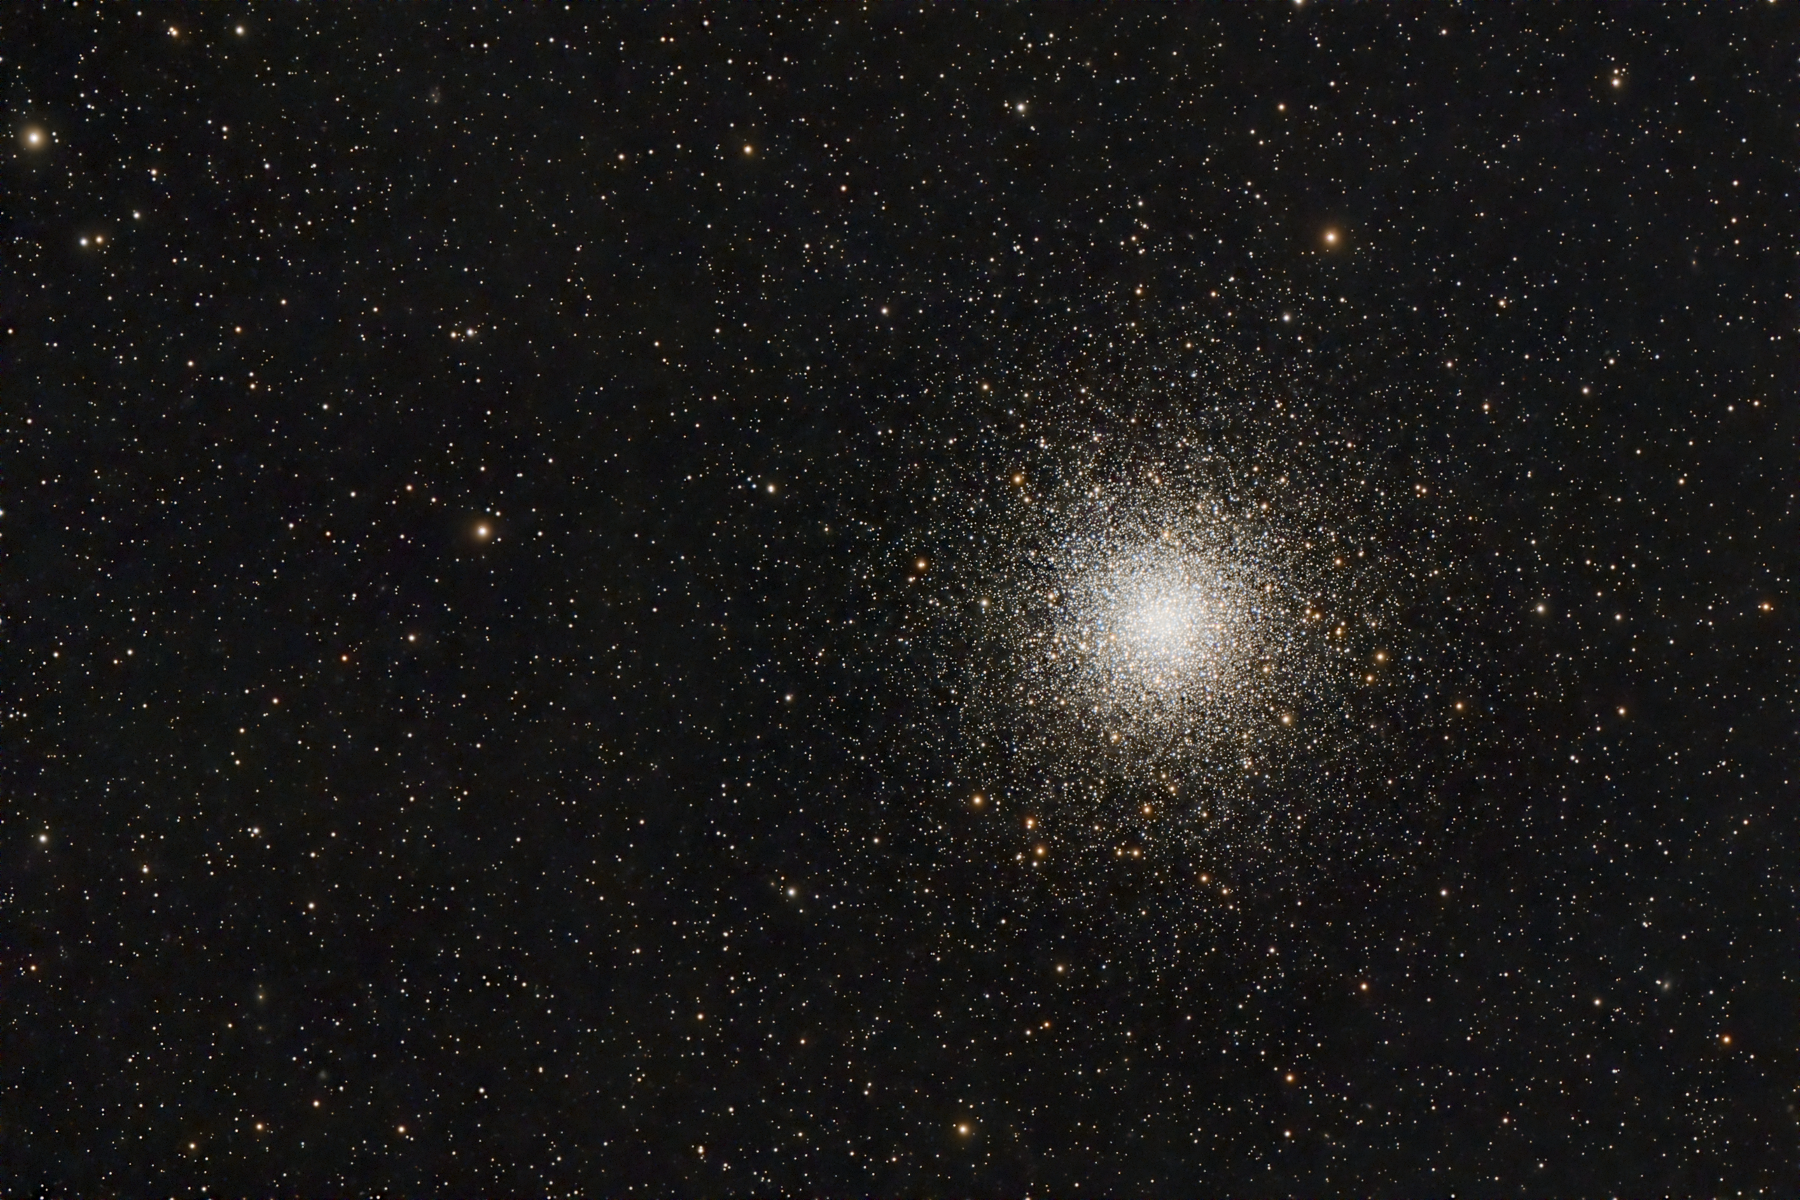 NGC 6254 in Ohpiuchus, M53